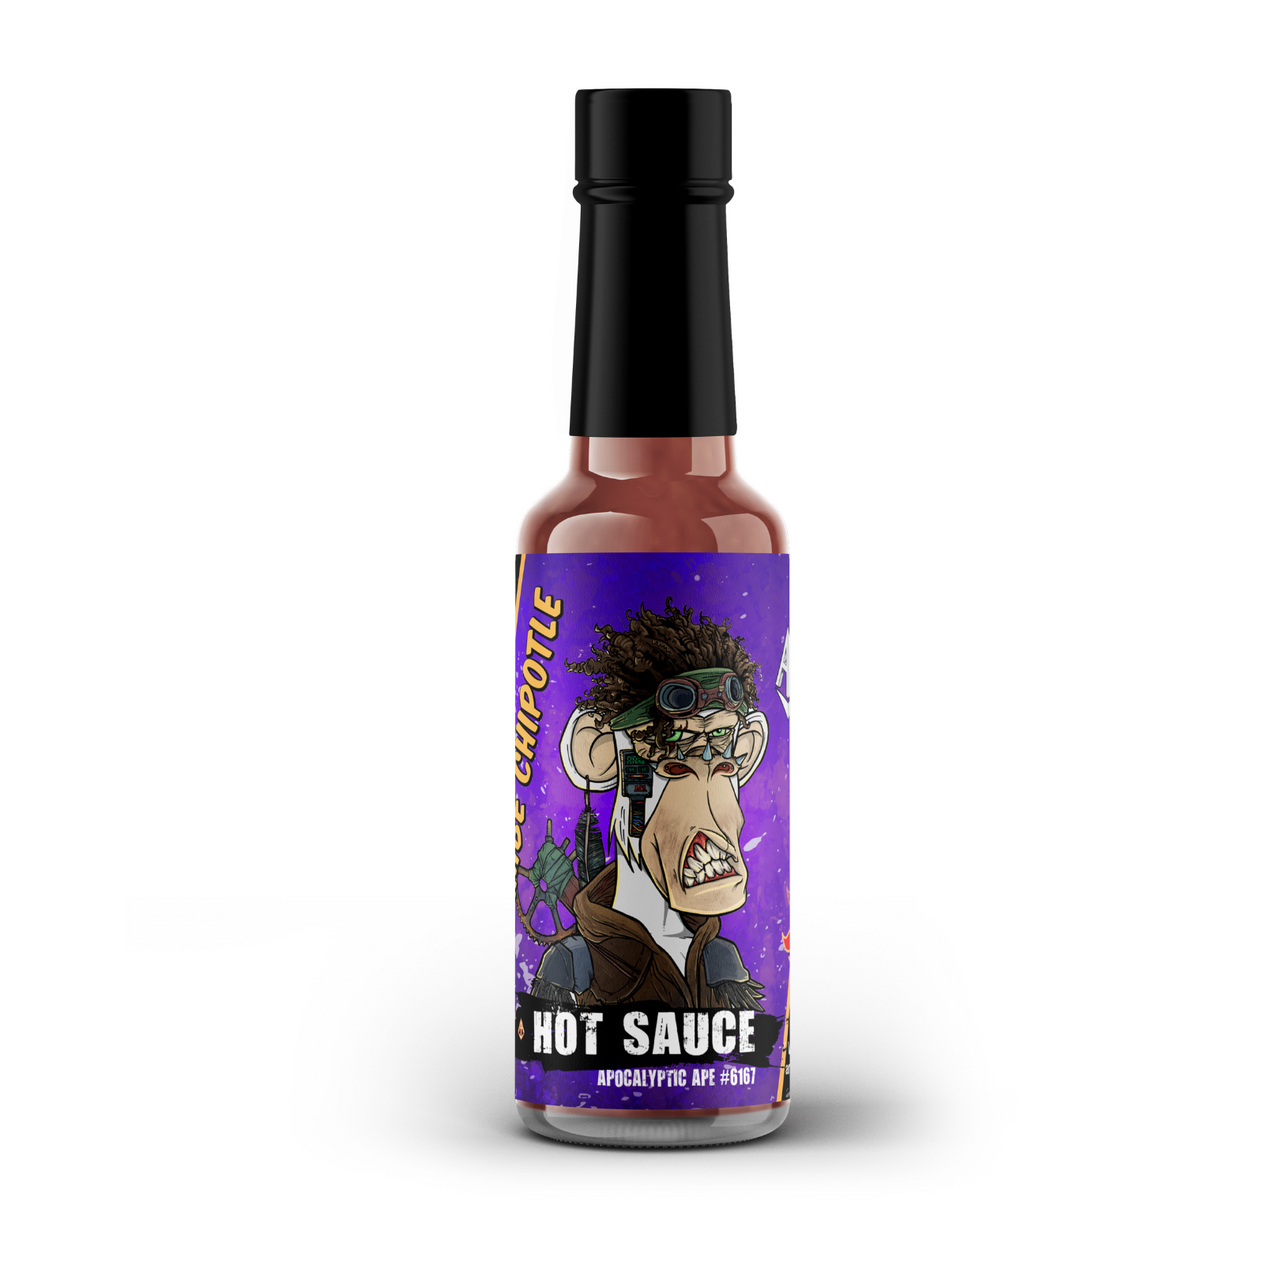 Apocalyptic Ape #6167 Harambe Chipotle Hot Sauce